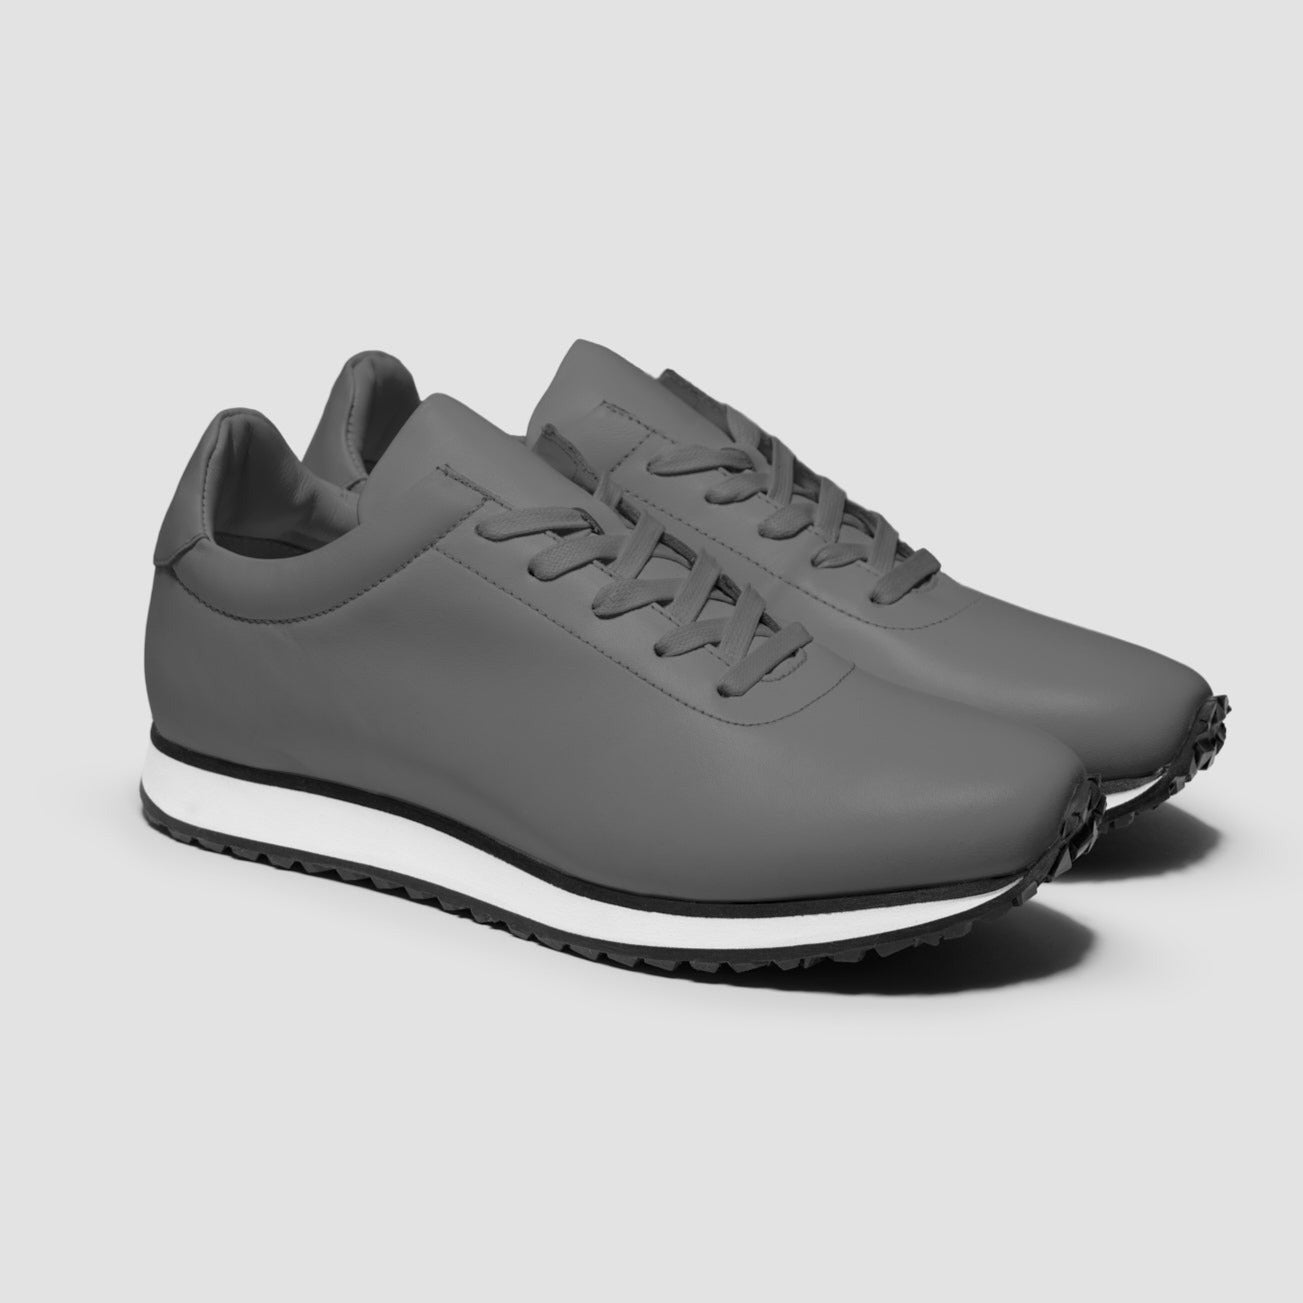 The Proper Running Sneaker ™ 003 - The Proper Label ™